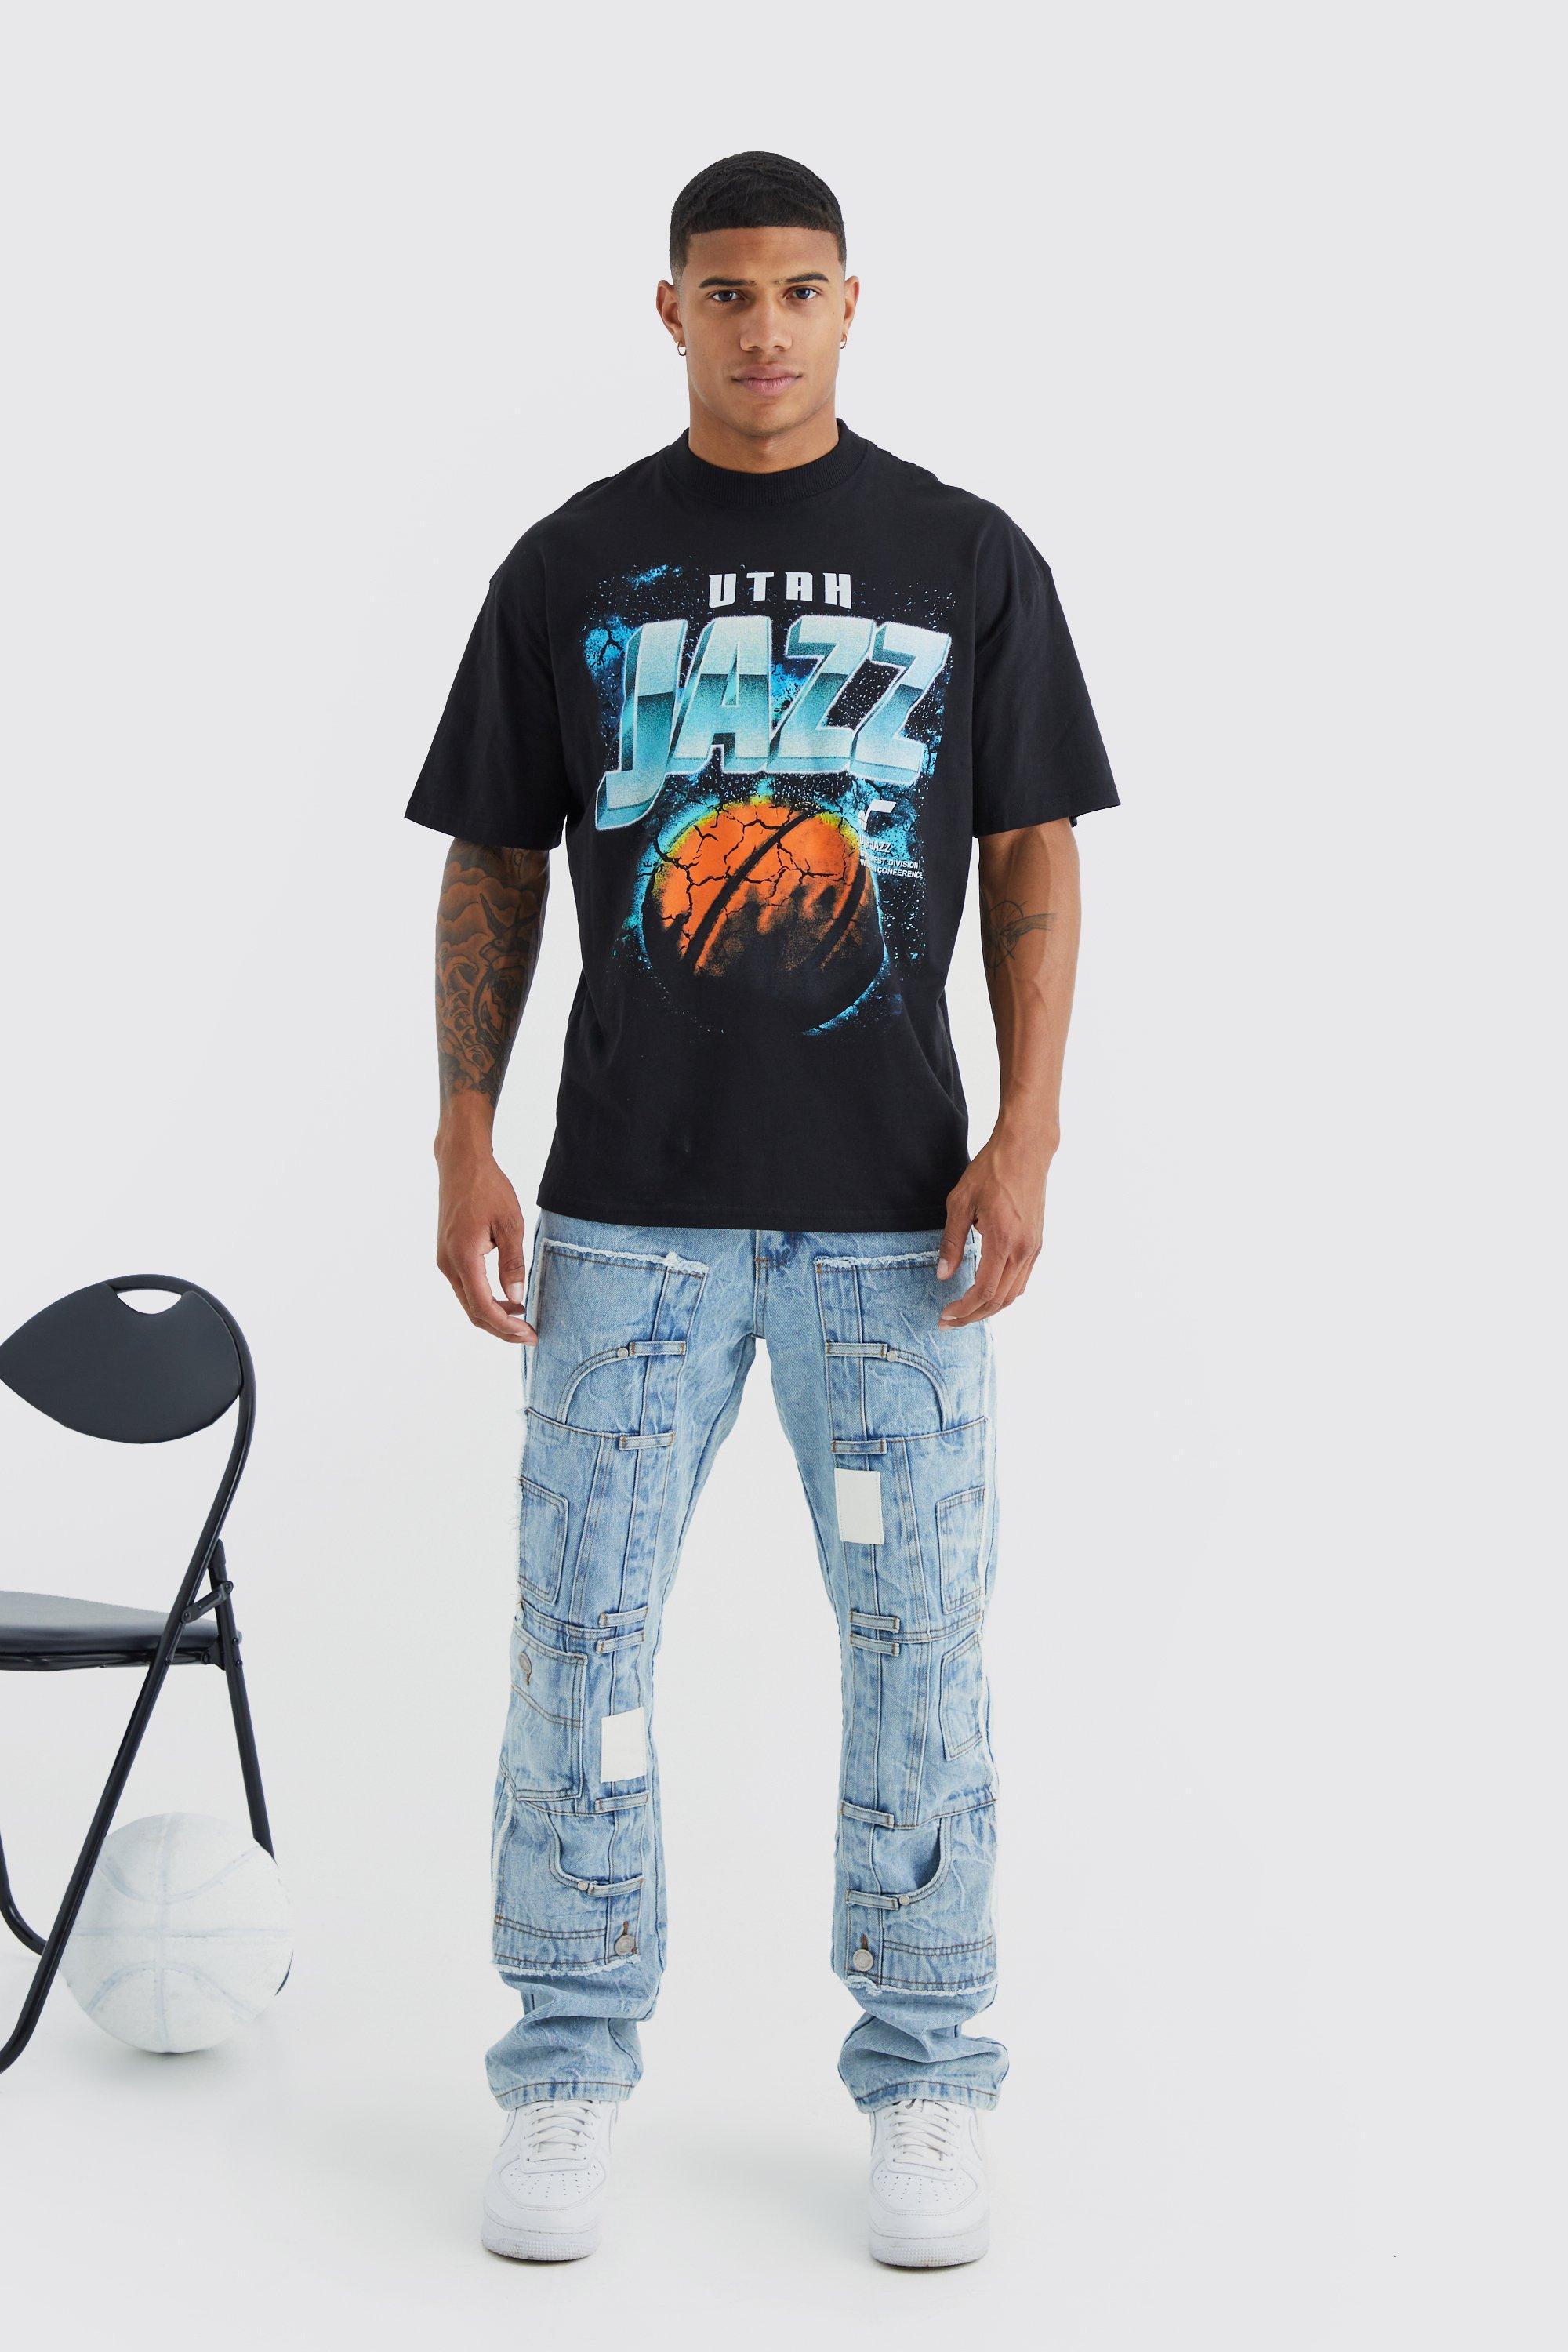 utah jazz t-shirt